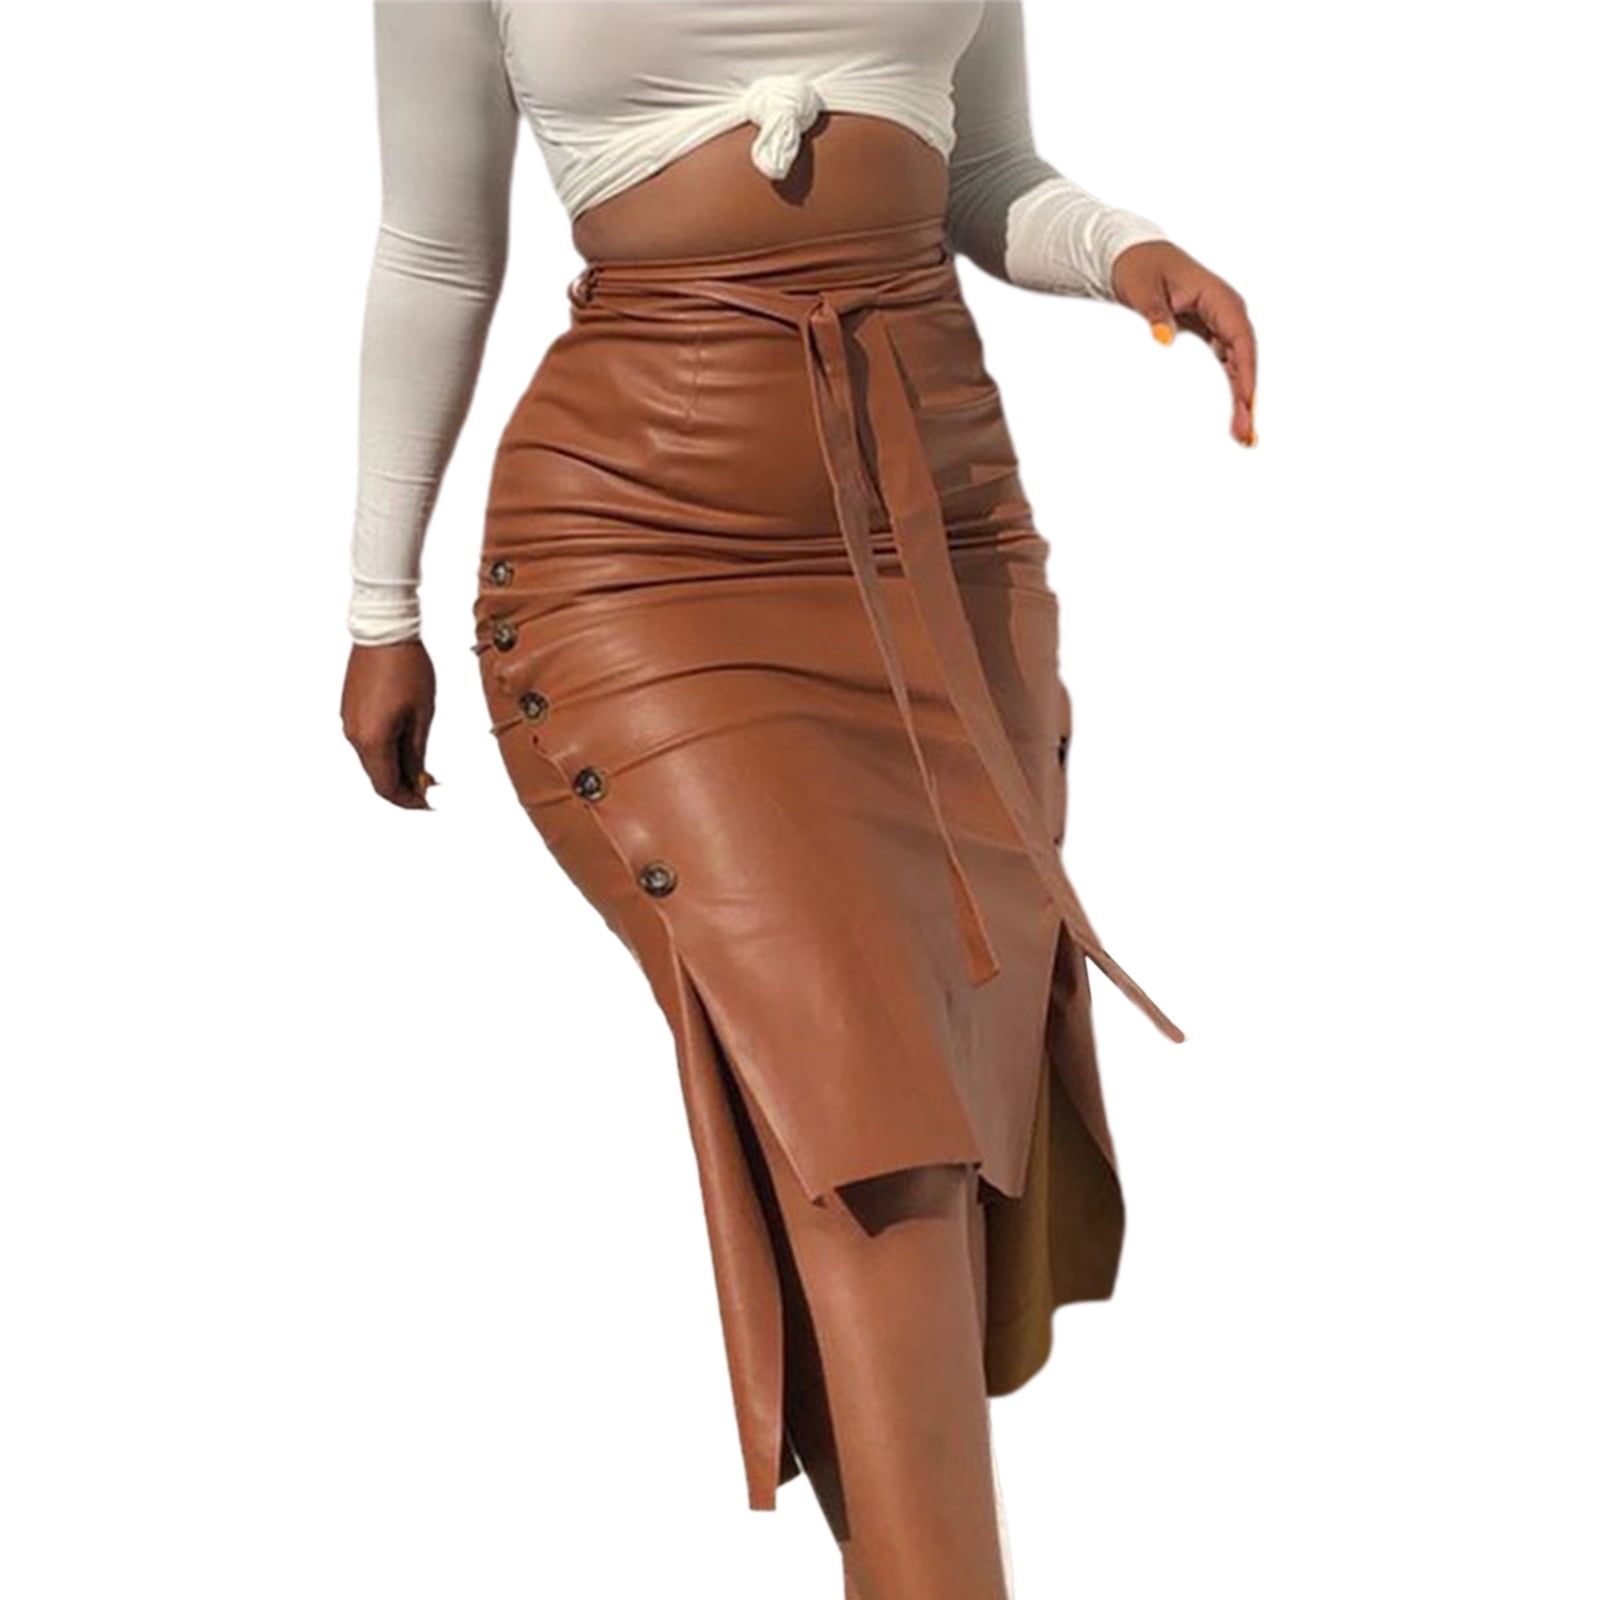 Yejaeka Women High Waist Solid Color Slit Bodycon Leather Midi Pencil Skirt